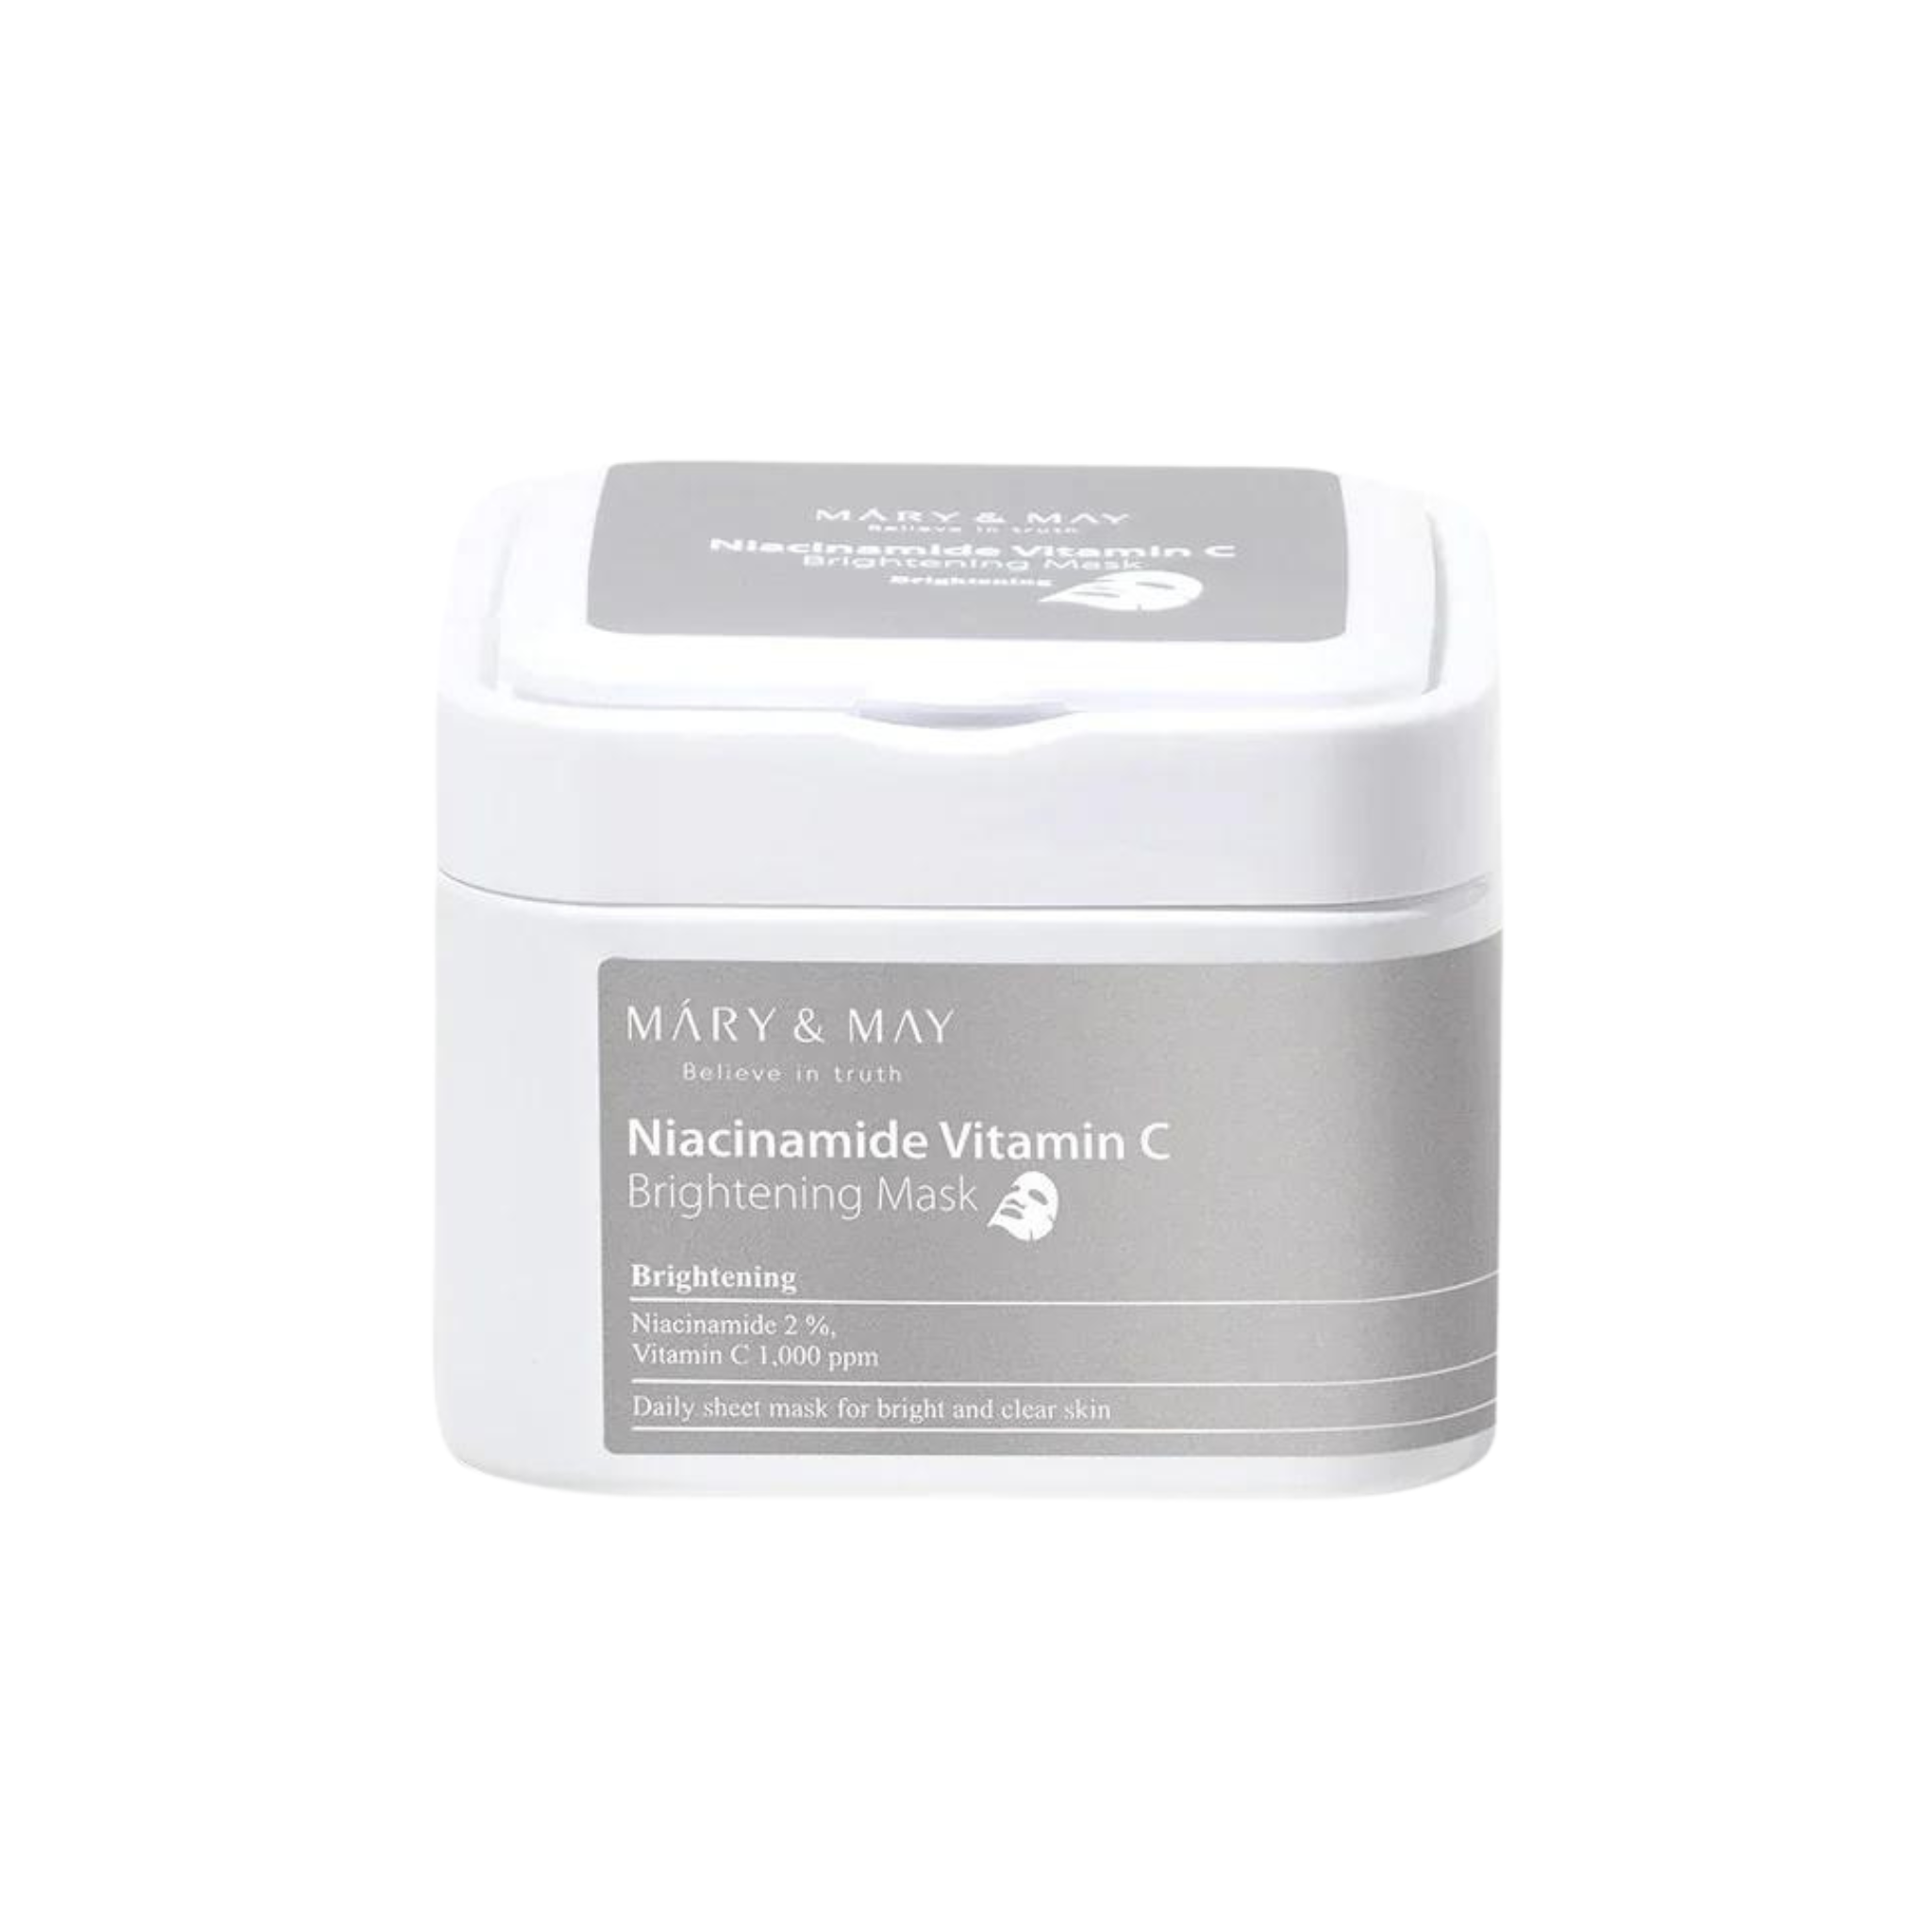 MARY & MAY Niacinamide Vitamin C Brightening Mask (30pcs)